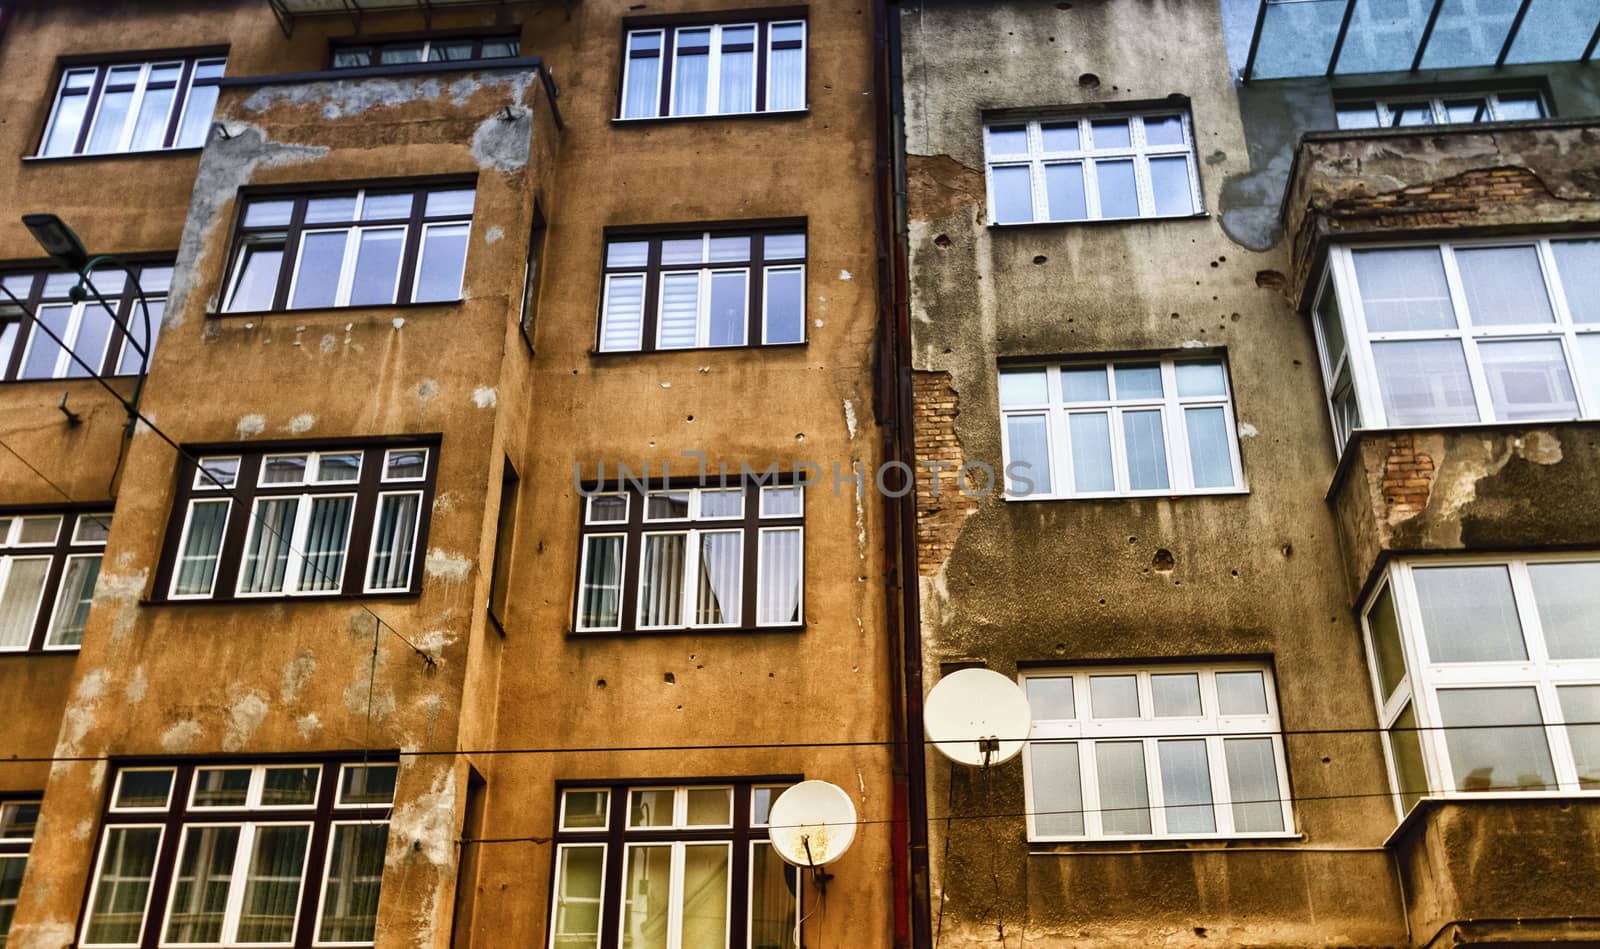 Bullet holes in a wall building in Sarajeva, Bosnia and Herzegovina by Elenaphotos21